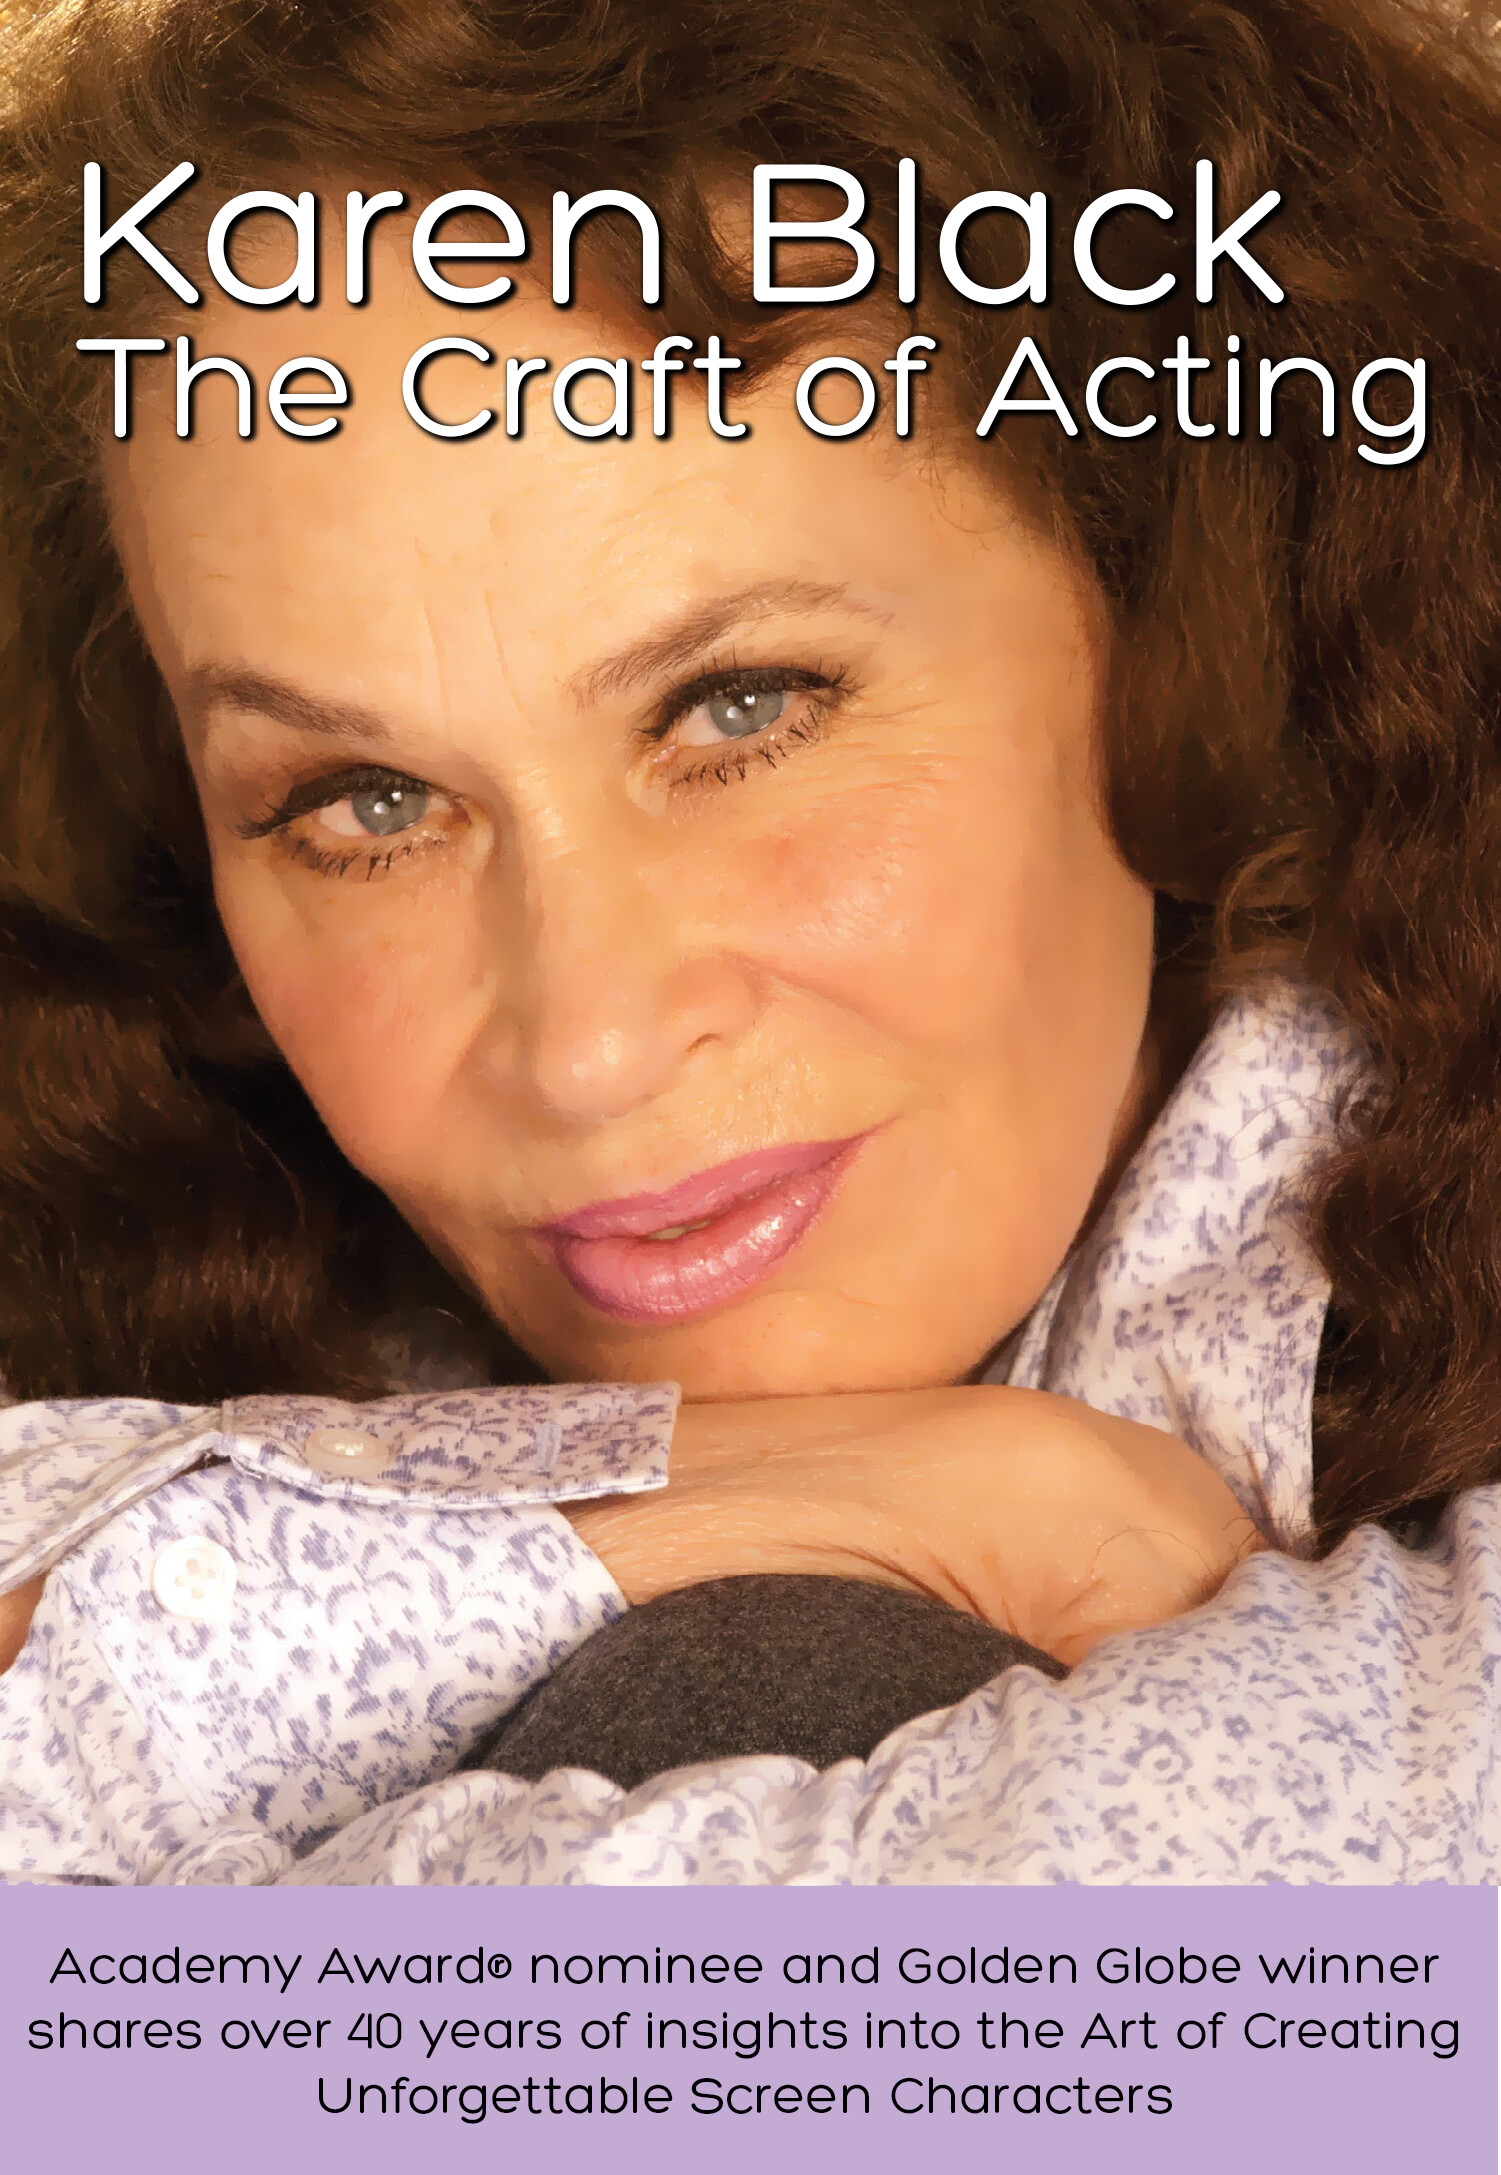 F2878 - Karen Black The Craft of Acting